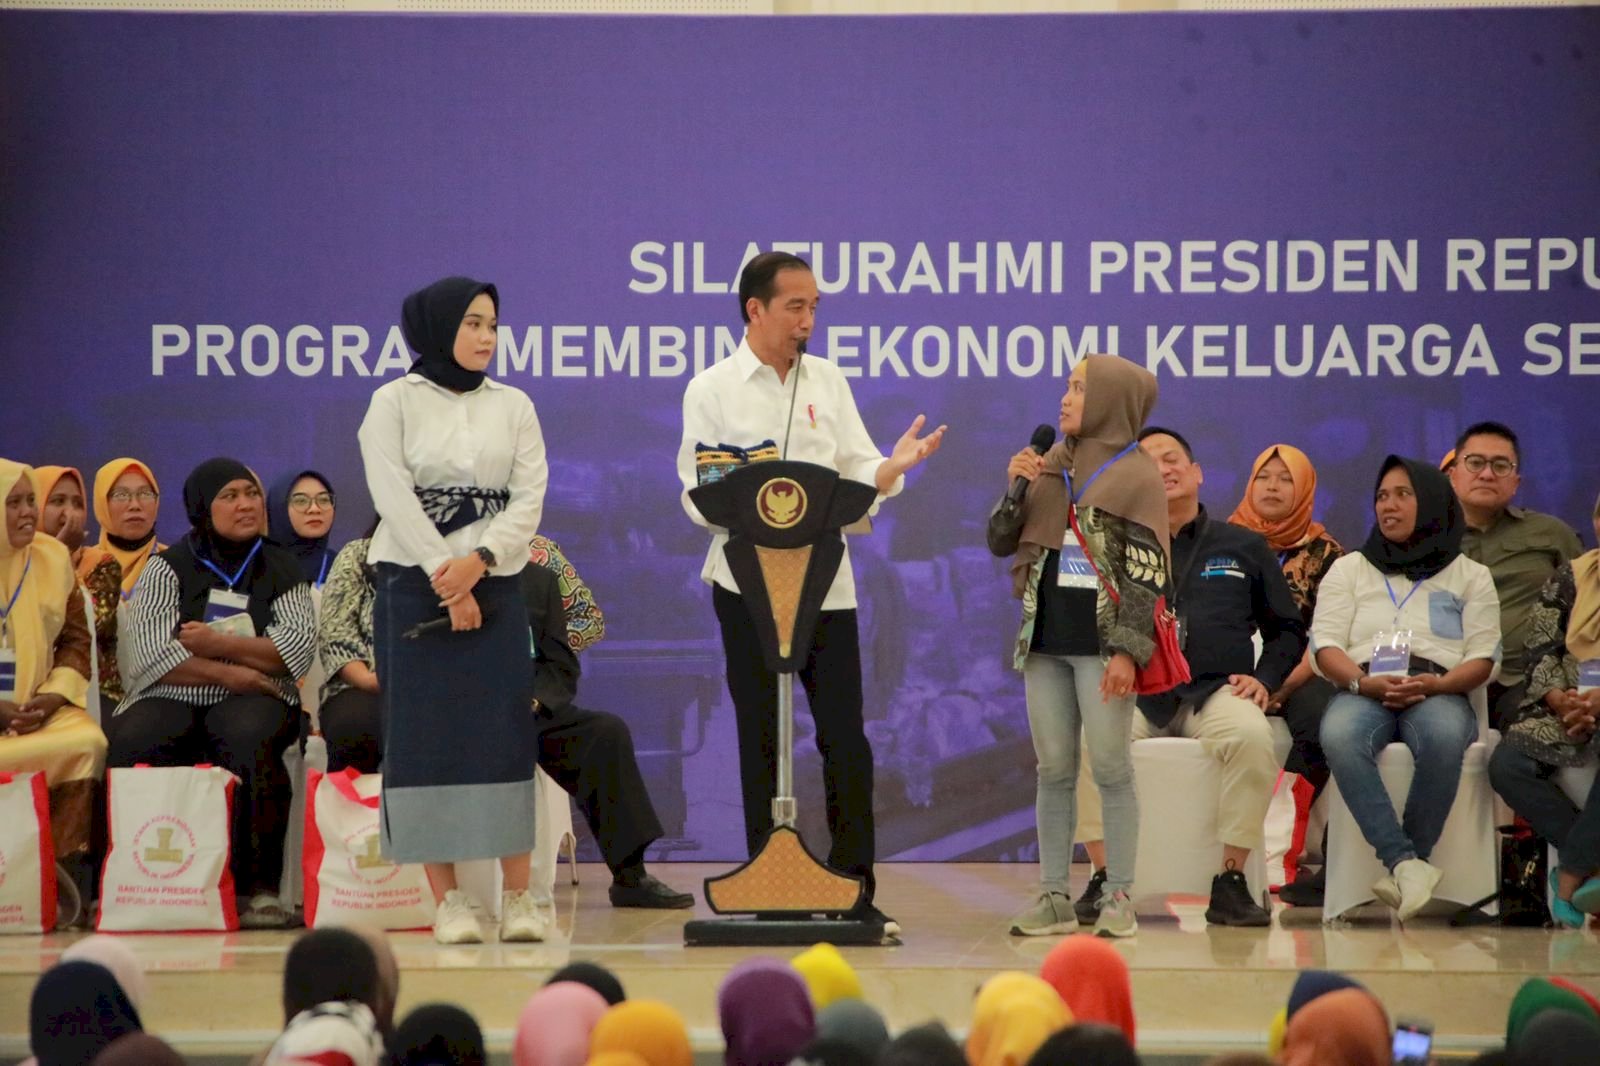 Presiden Jokowi Sambut Baik UMKM Terhadap Program Mekaar